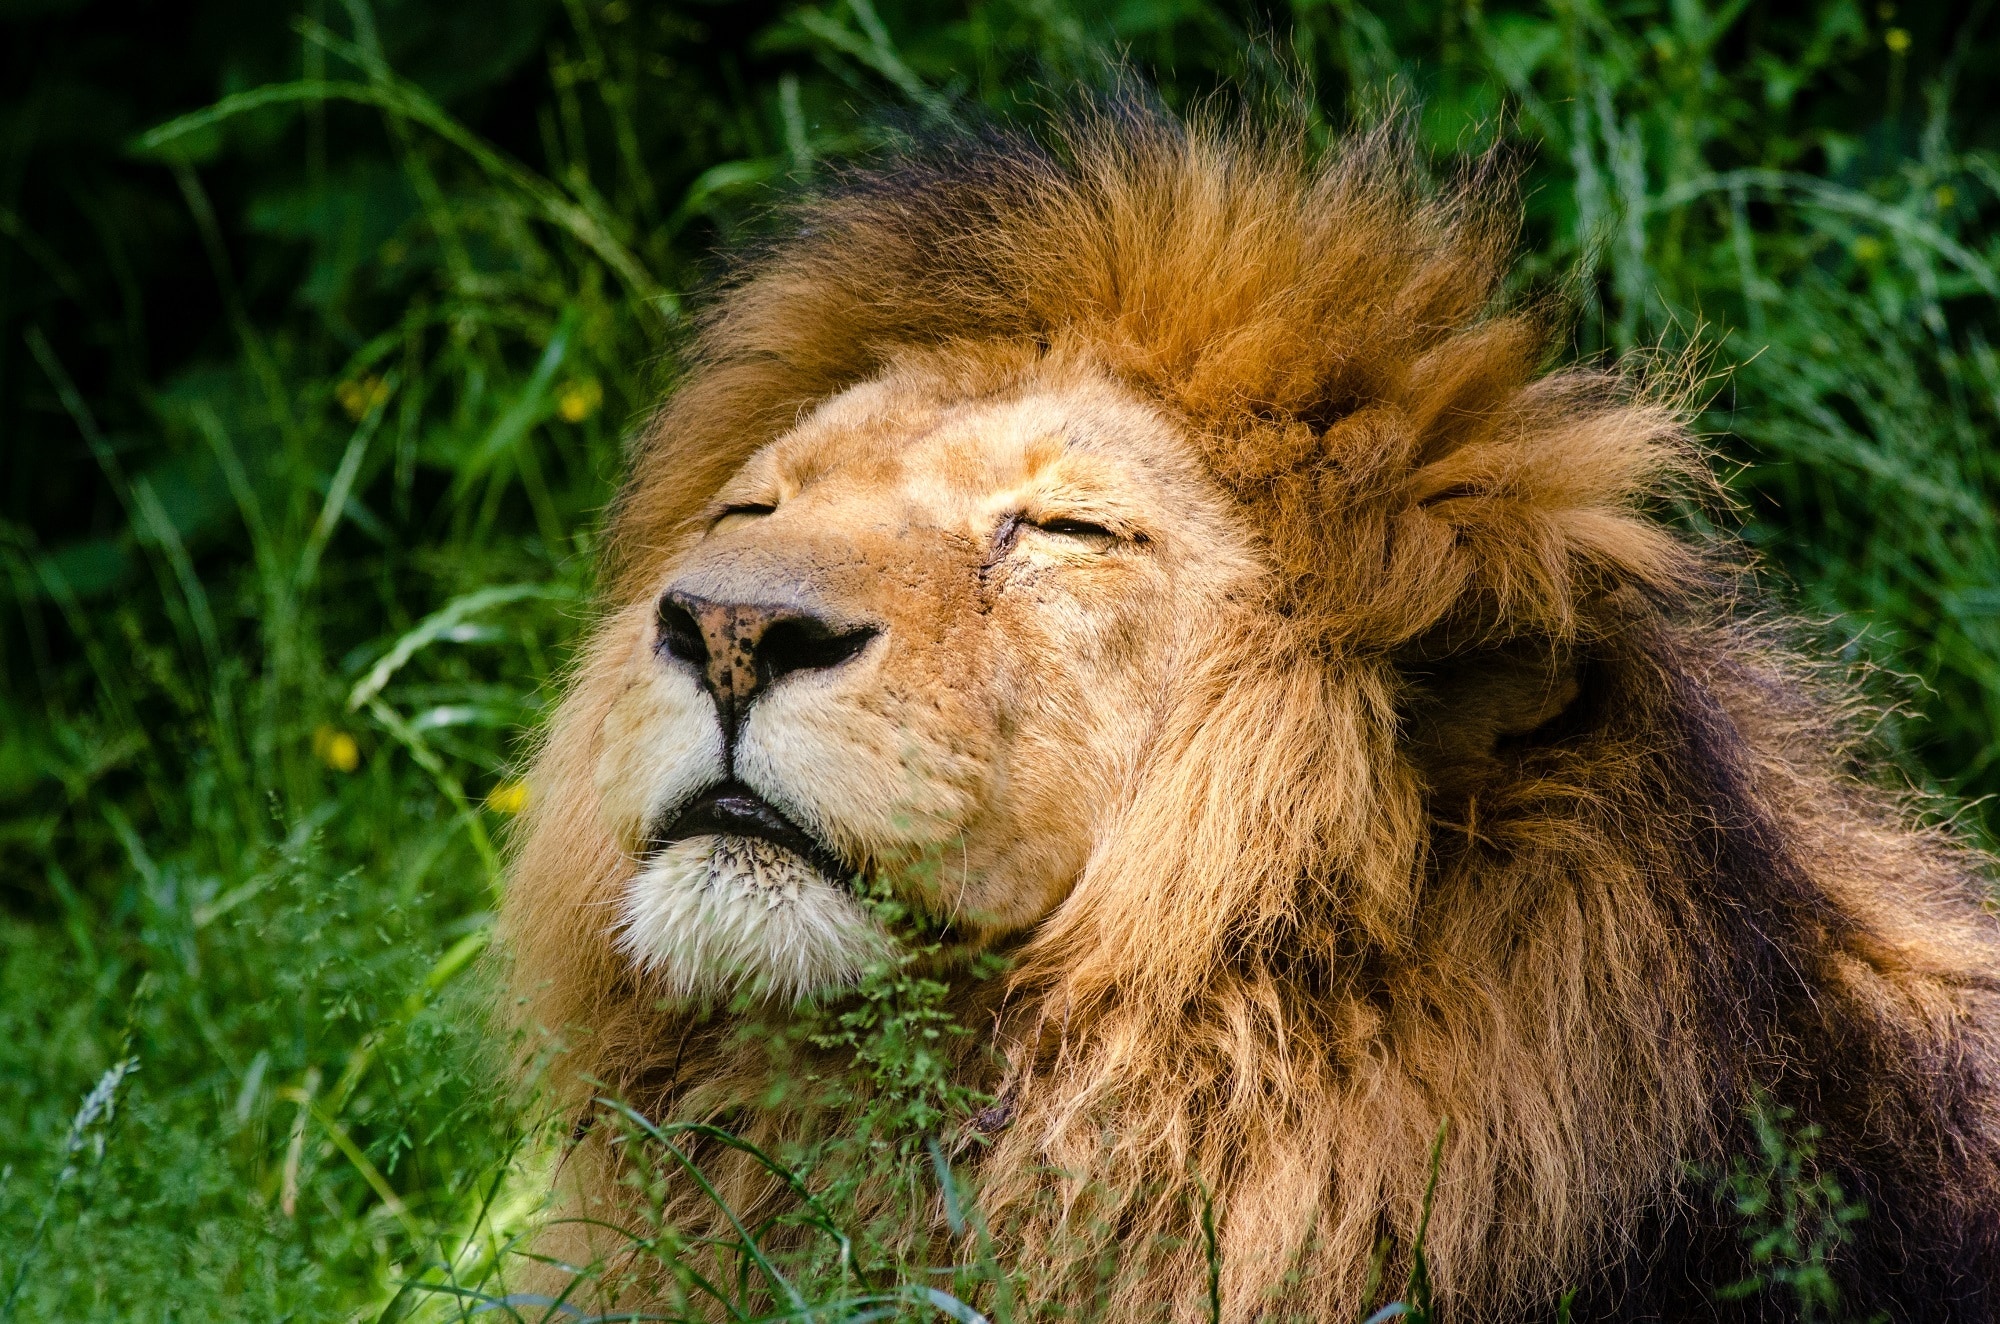 lion sleeping on green grass during daytime